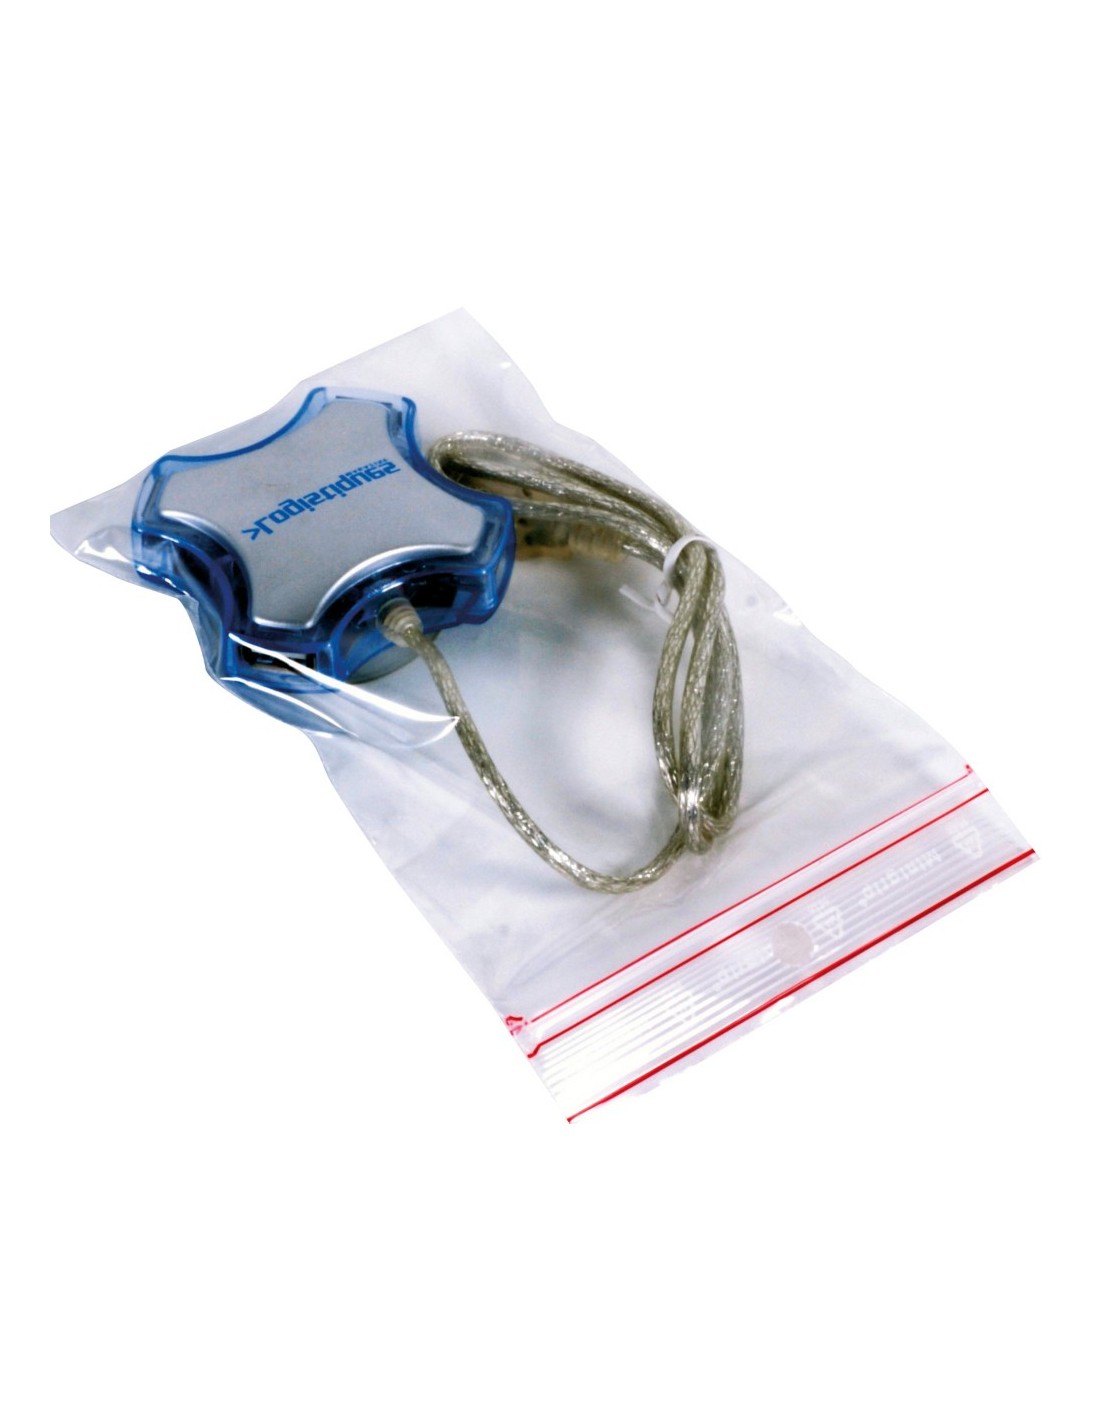 Sachet plastique fermeture zip 180x250mm - Emballage chez Equip'pro